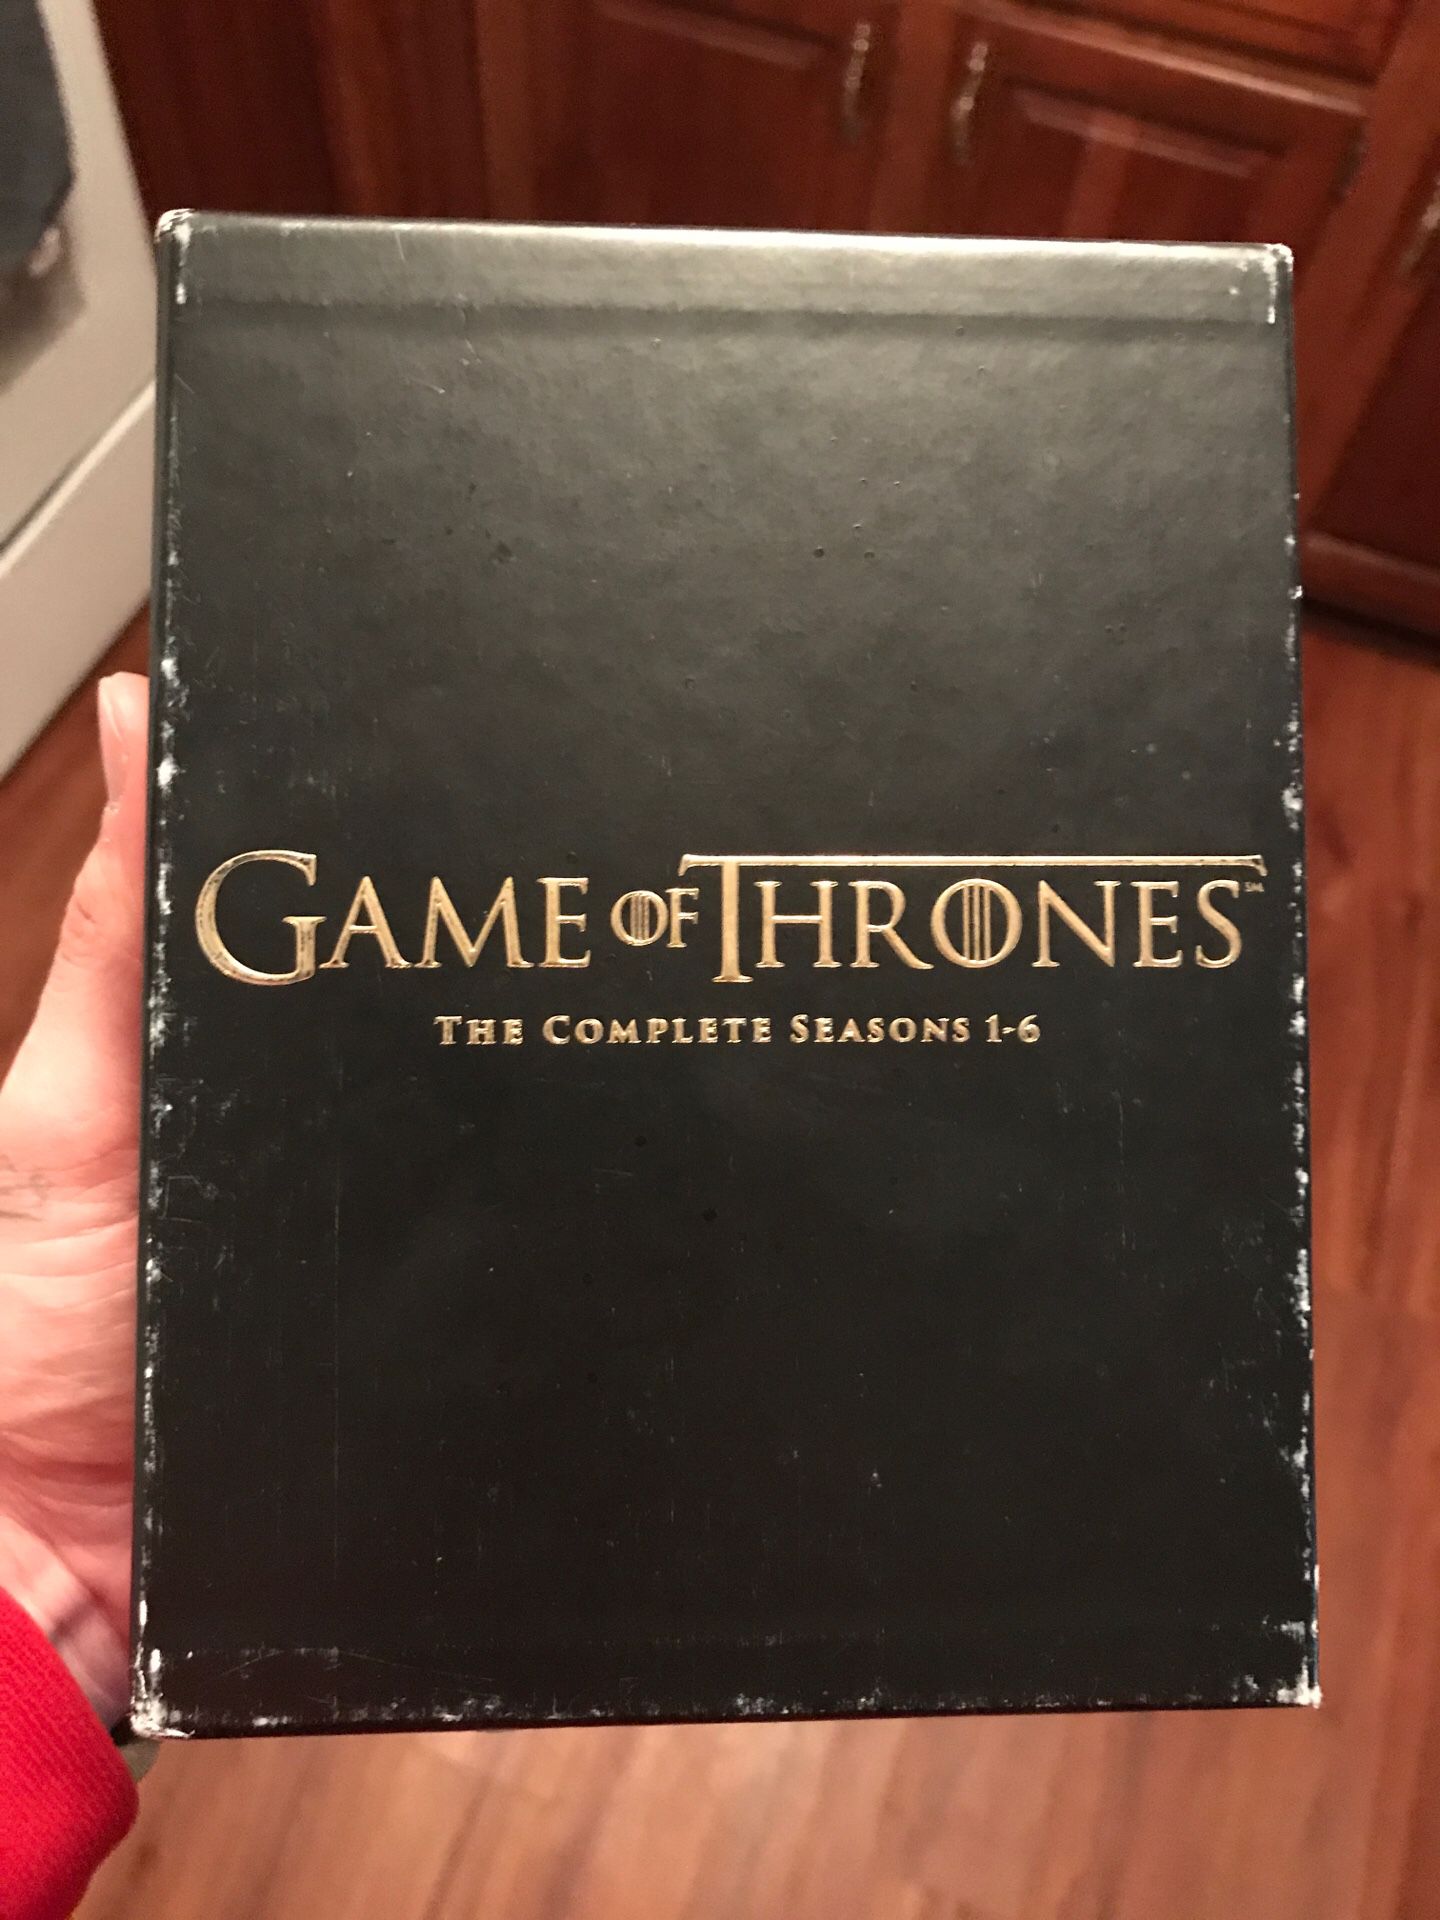 Game of thrones season 1-6 (Blu Ray)